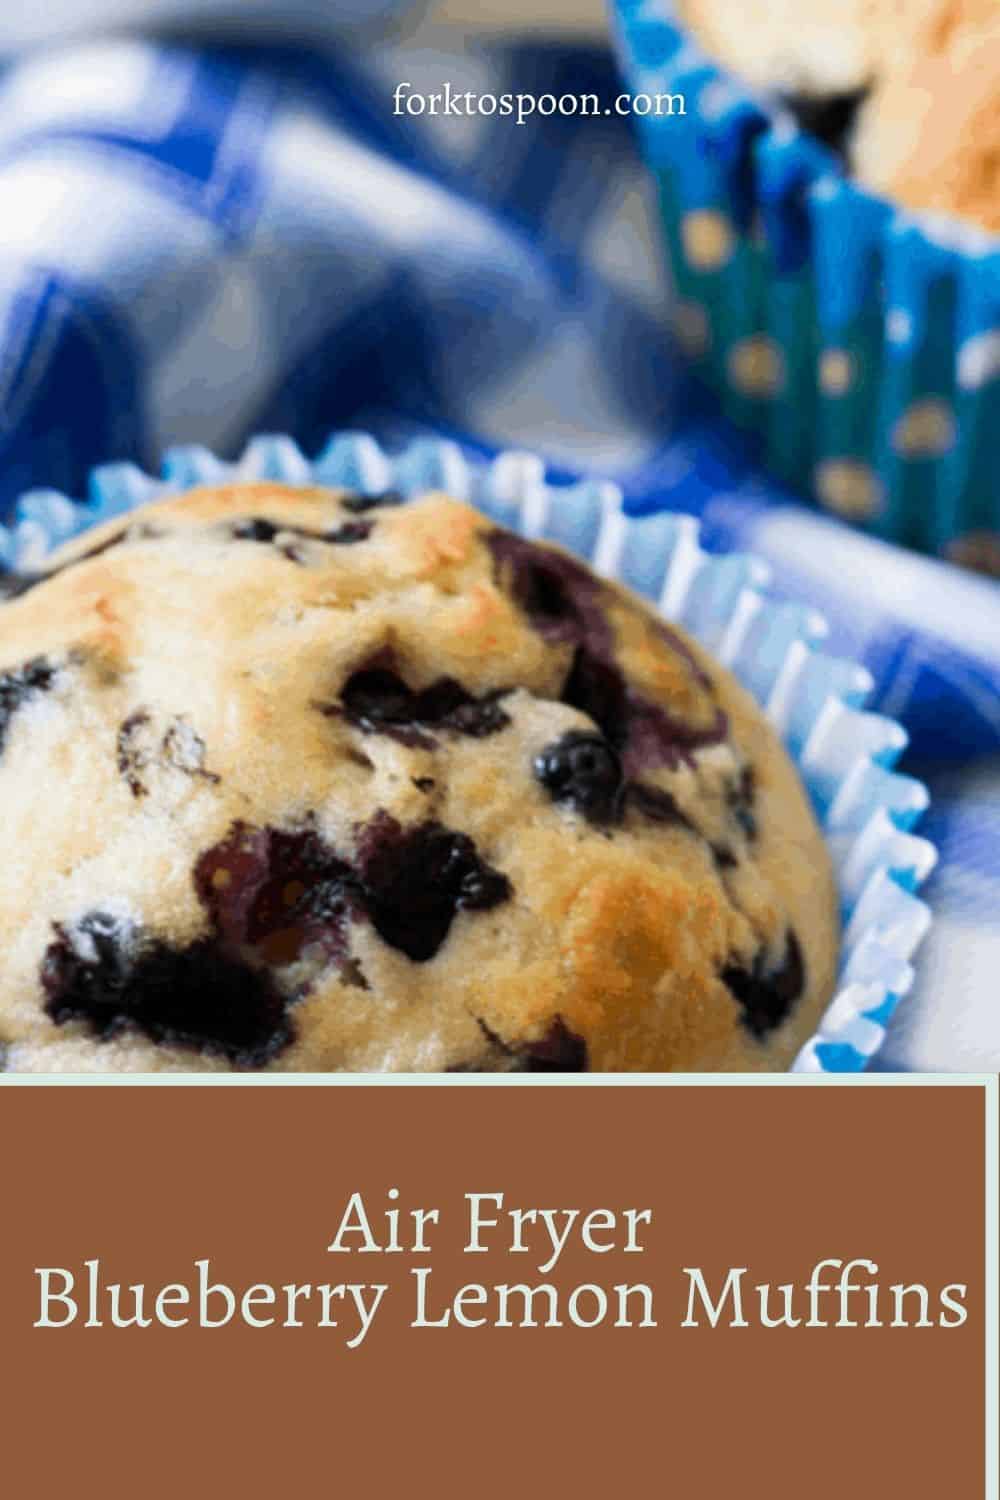 Air Fryer Blueberry Lemon Muffins